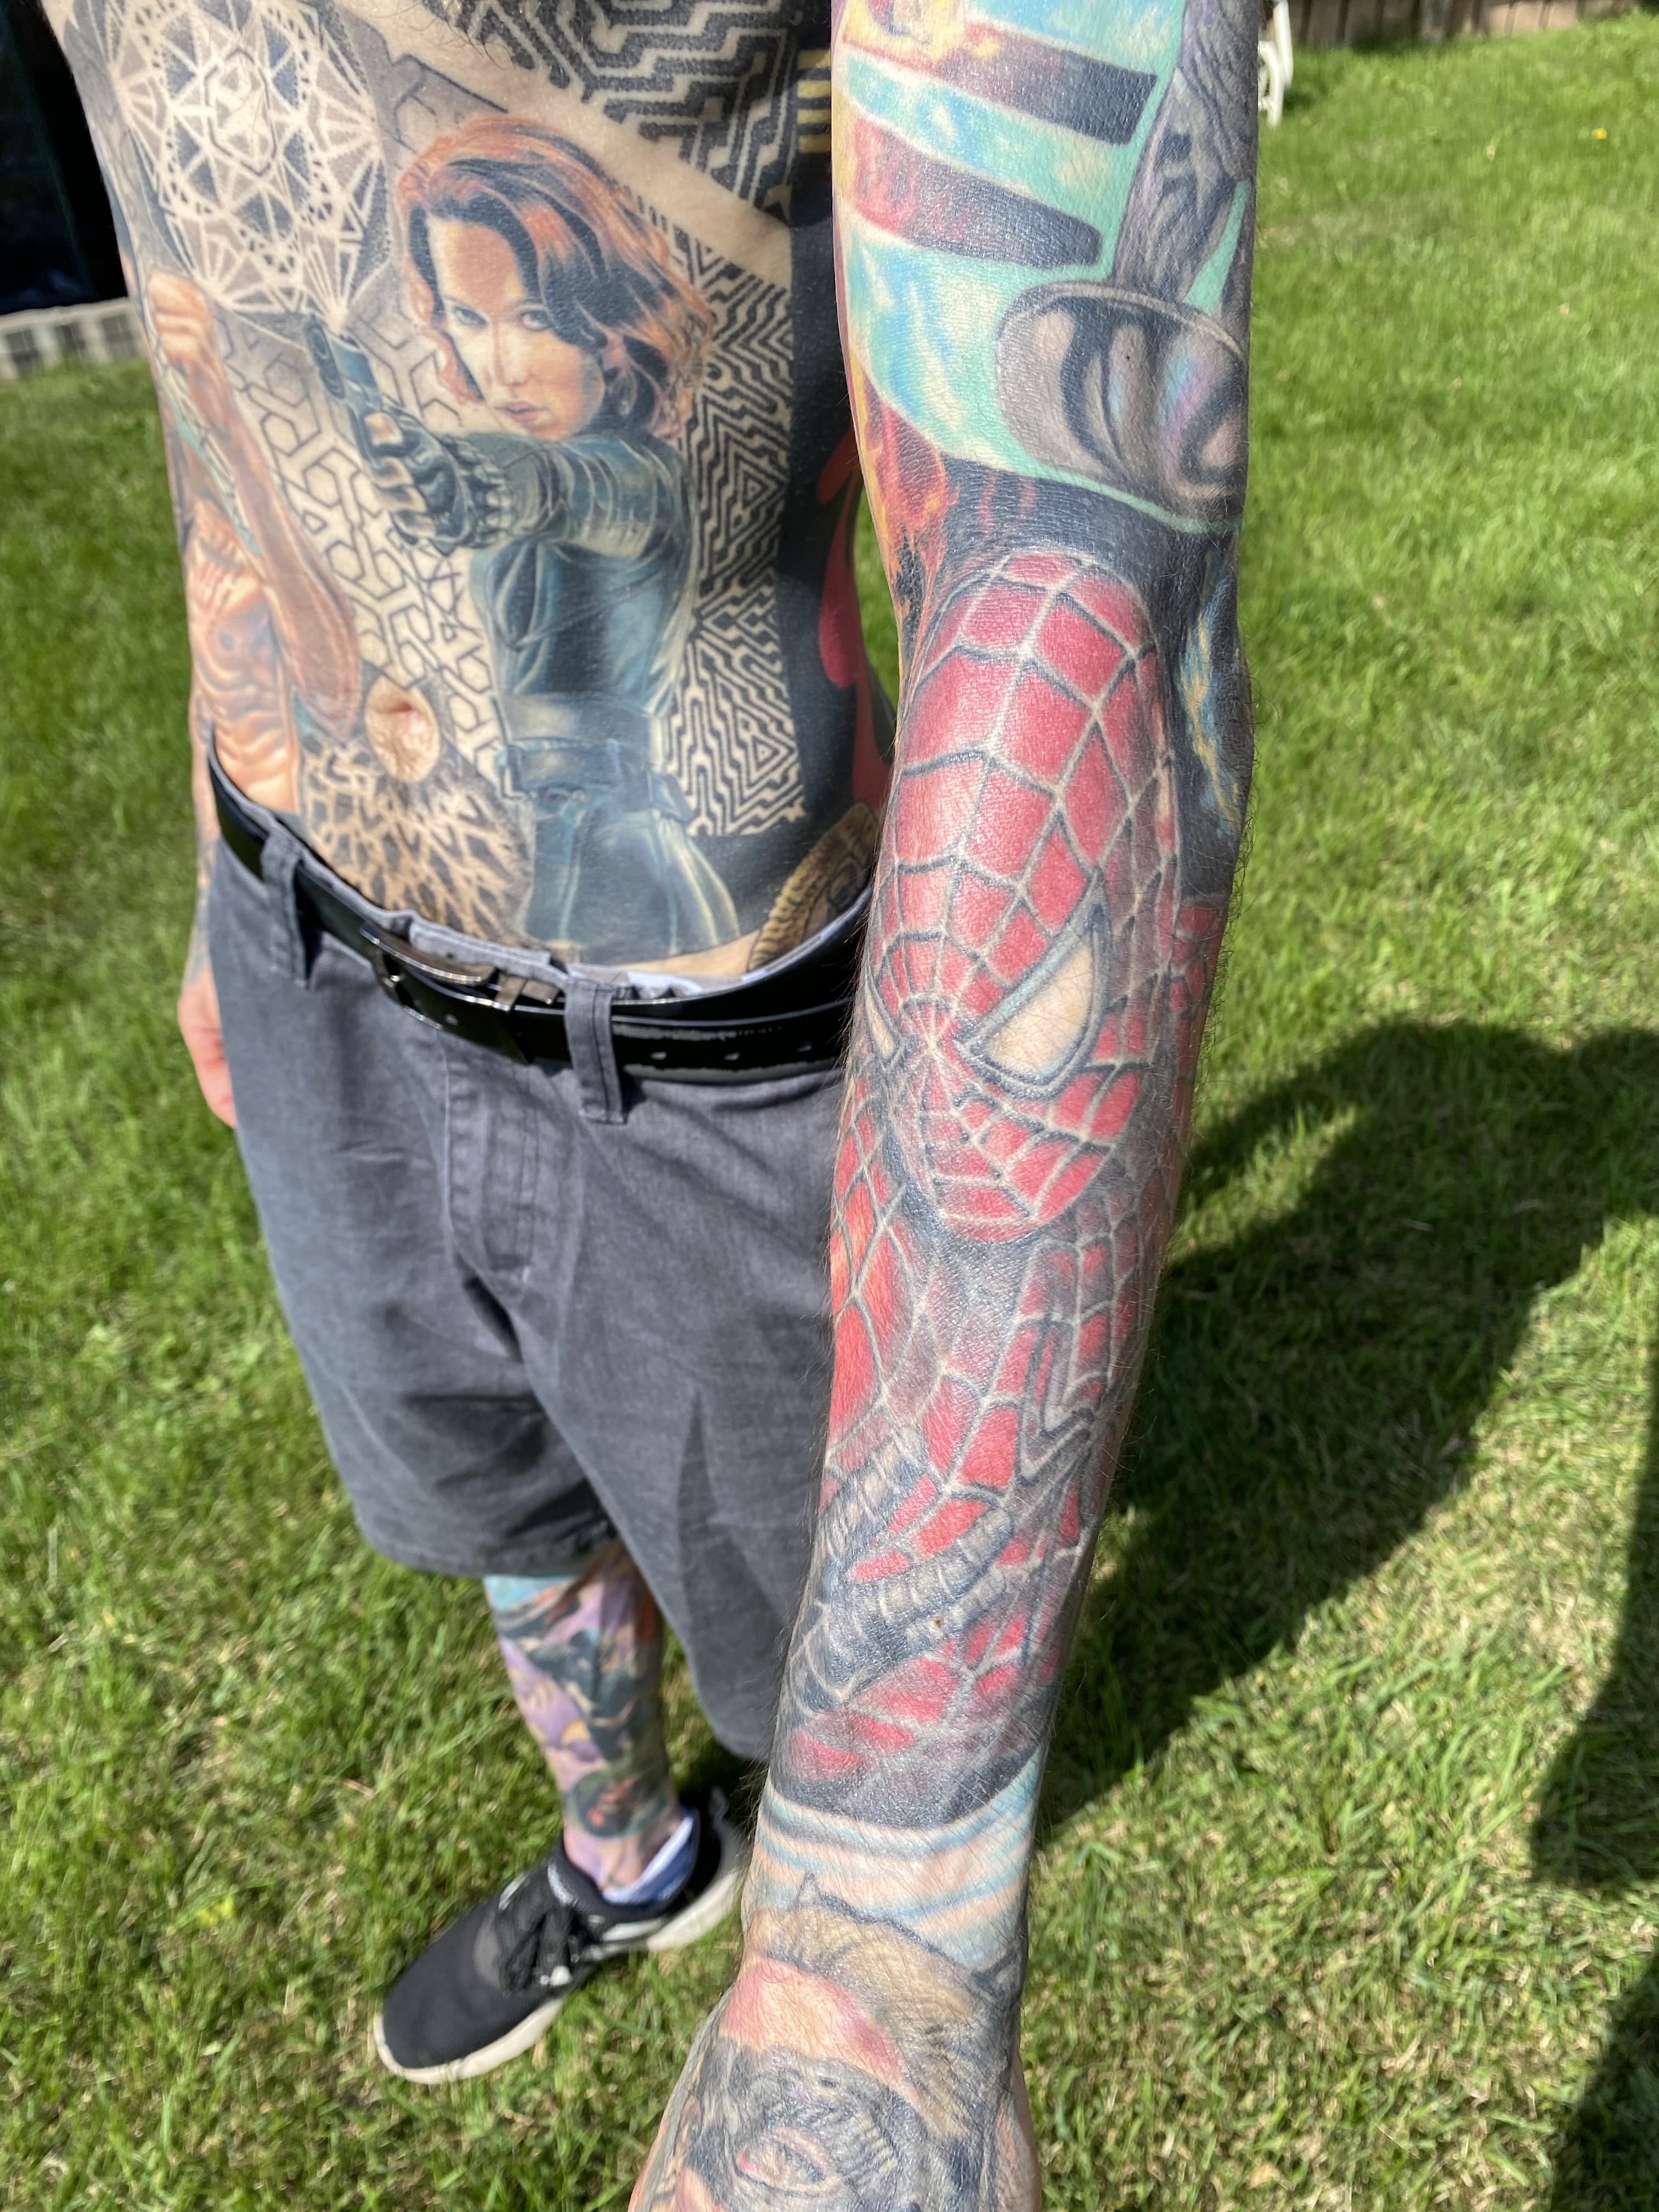 Spider-Man Leg Tattoo by SequinSuperNOVA on DeviantArt